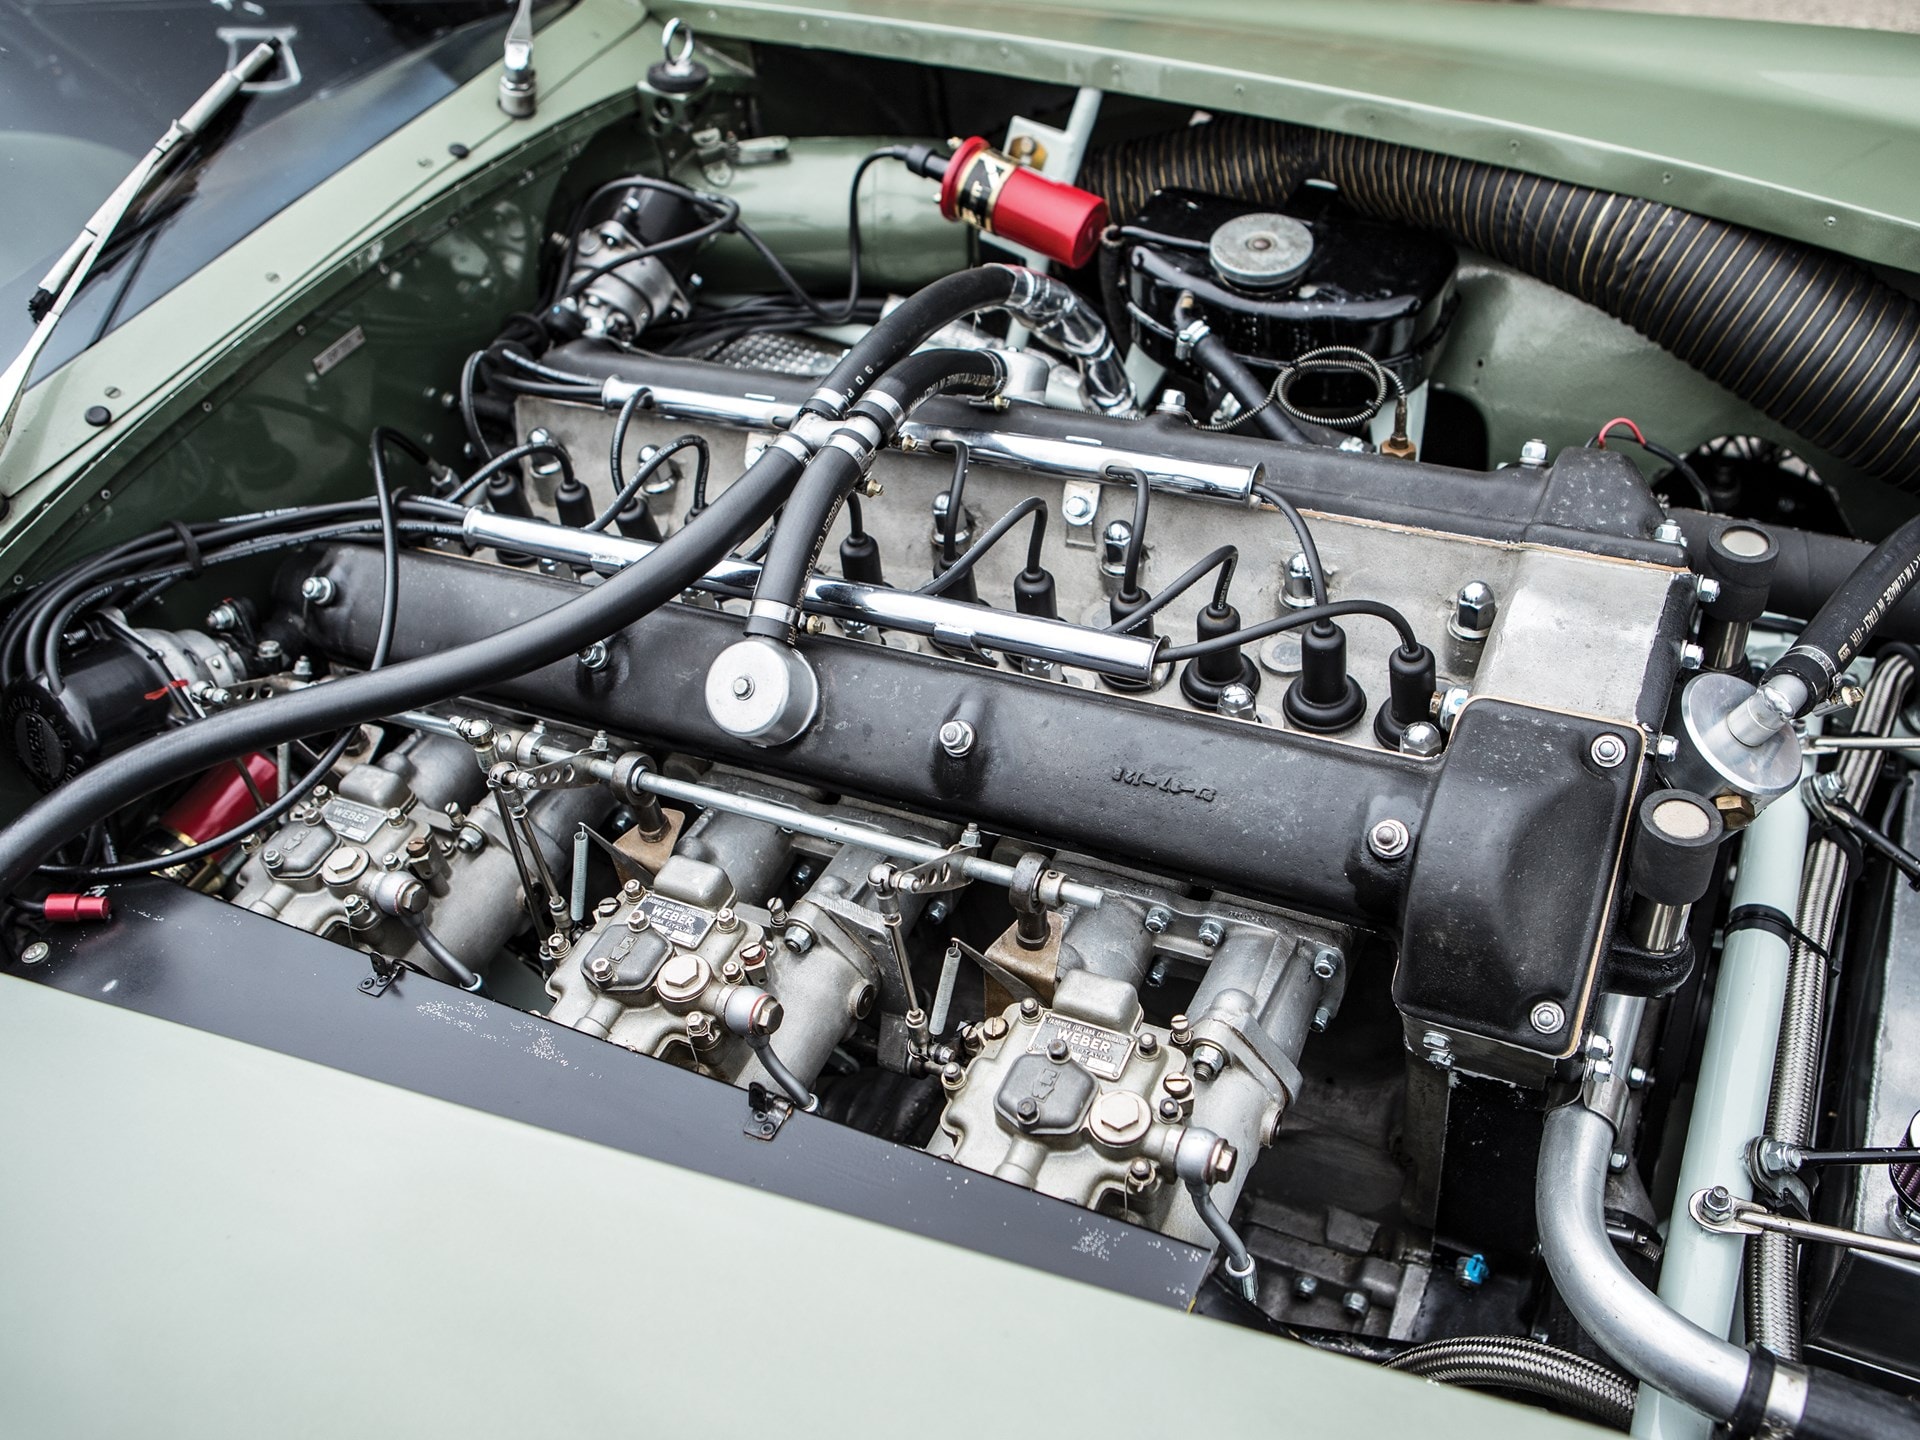 1963 Aston Martin DP215 Grand Touring Prototype Sothebys Auction 20 million usd